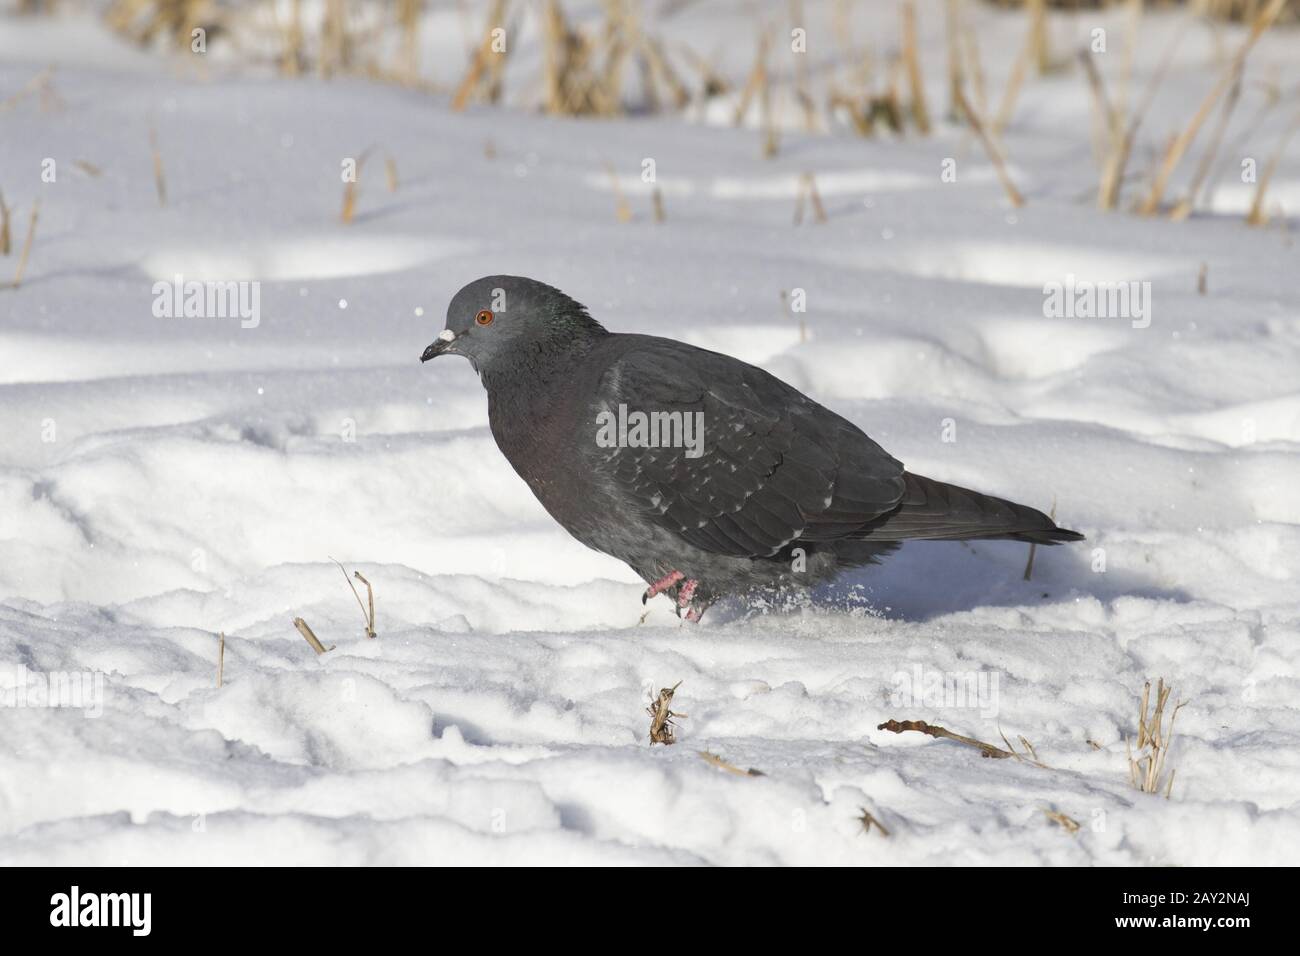 Dove gray running through the snow. Stock Photo